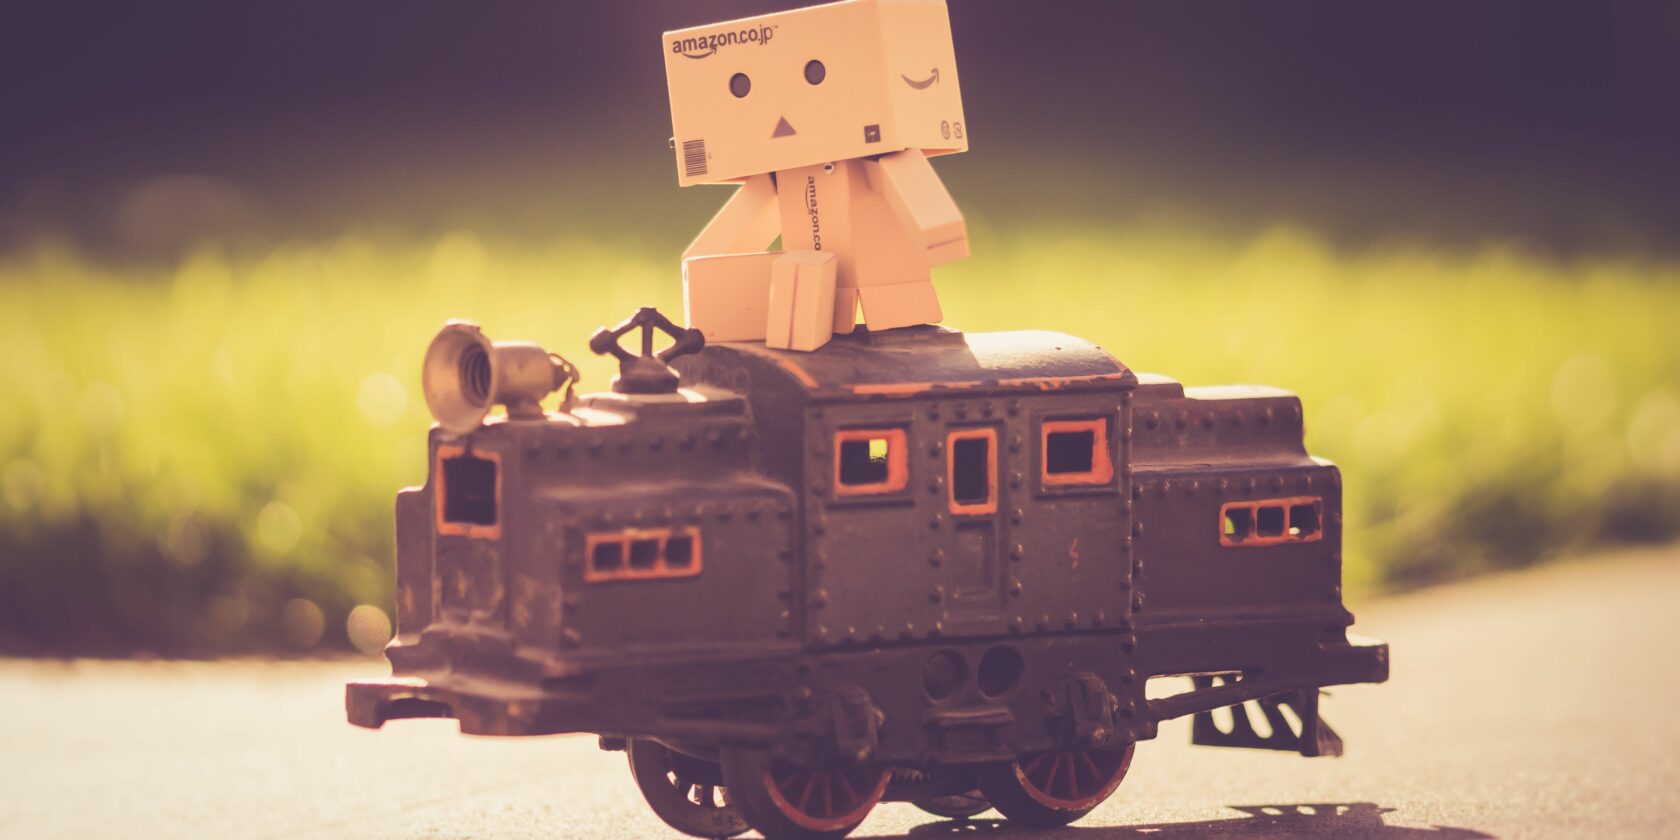 vintage toy train - do u have blog cover